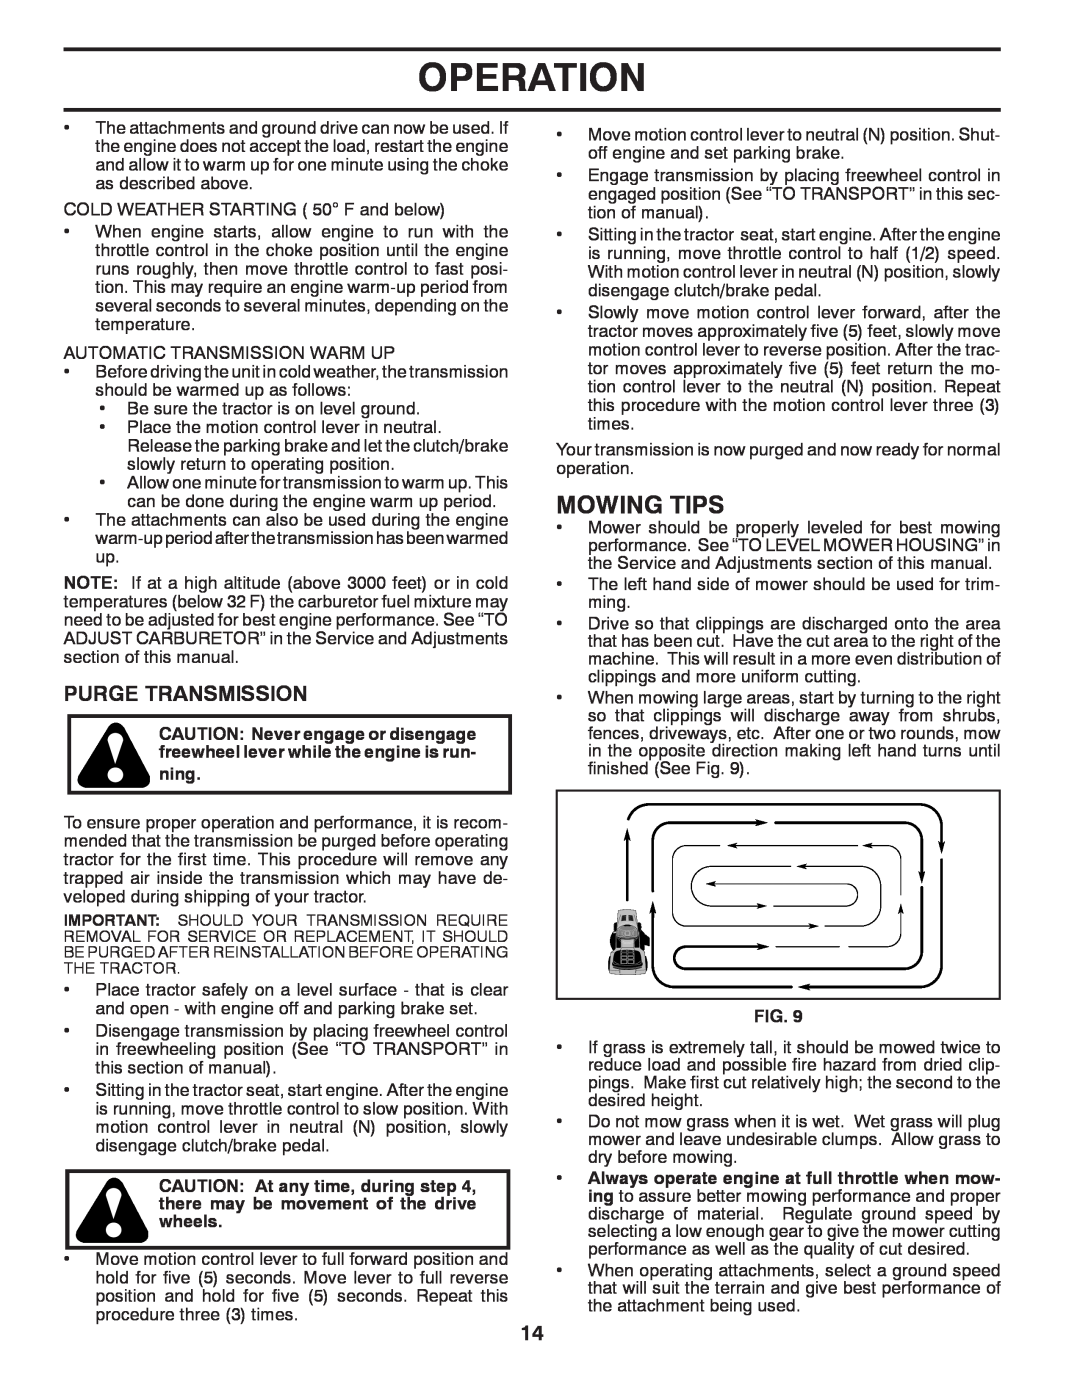 Poulan PBA195H42LT manual Mowing Tips, Purge Transmission, Operation 